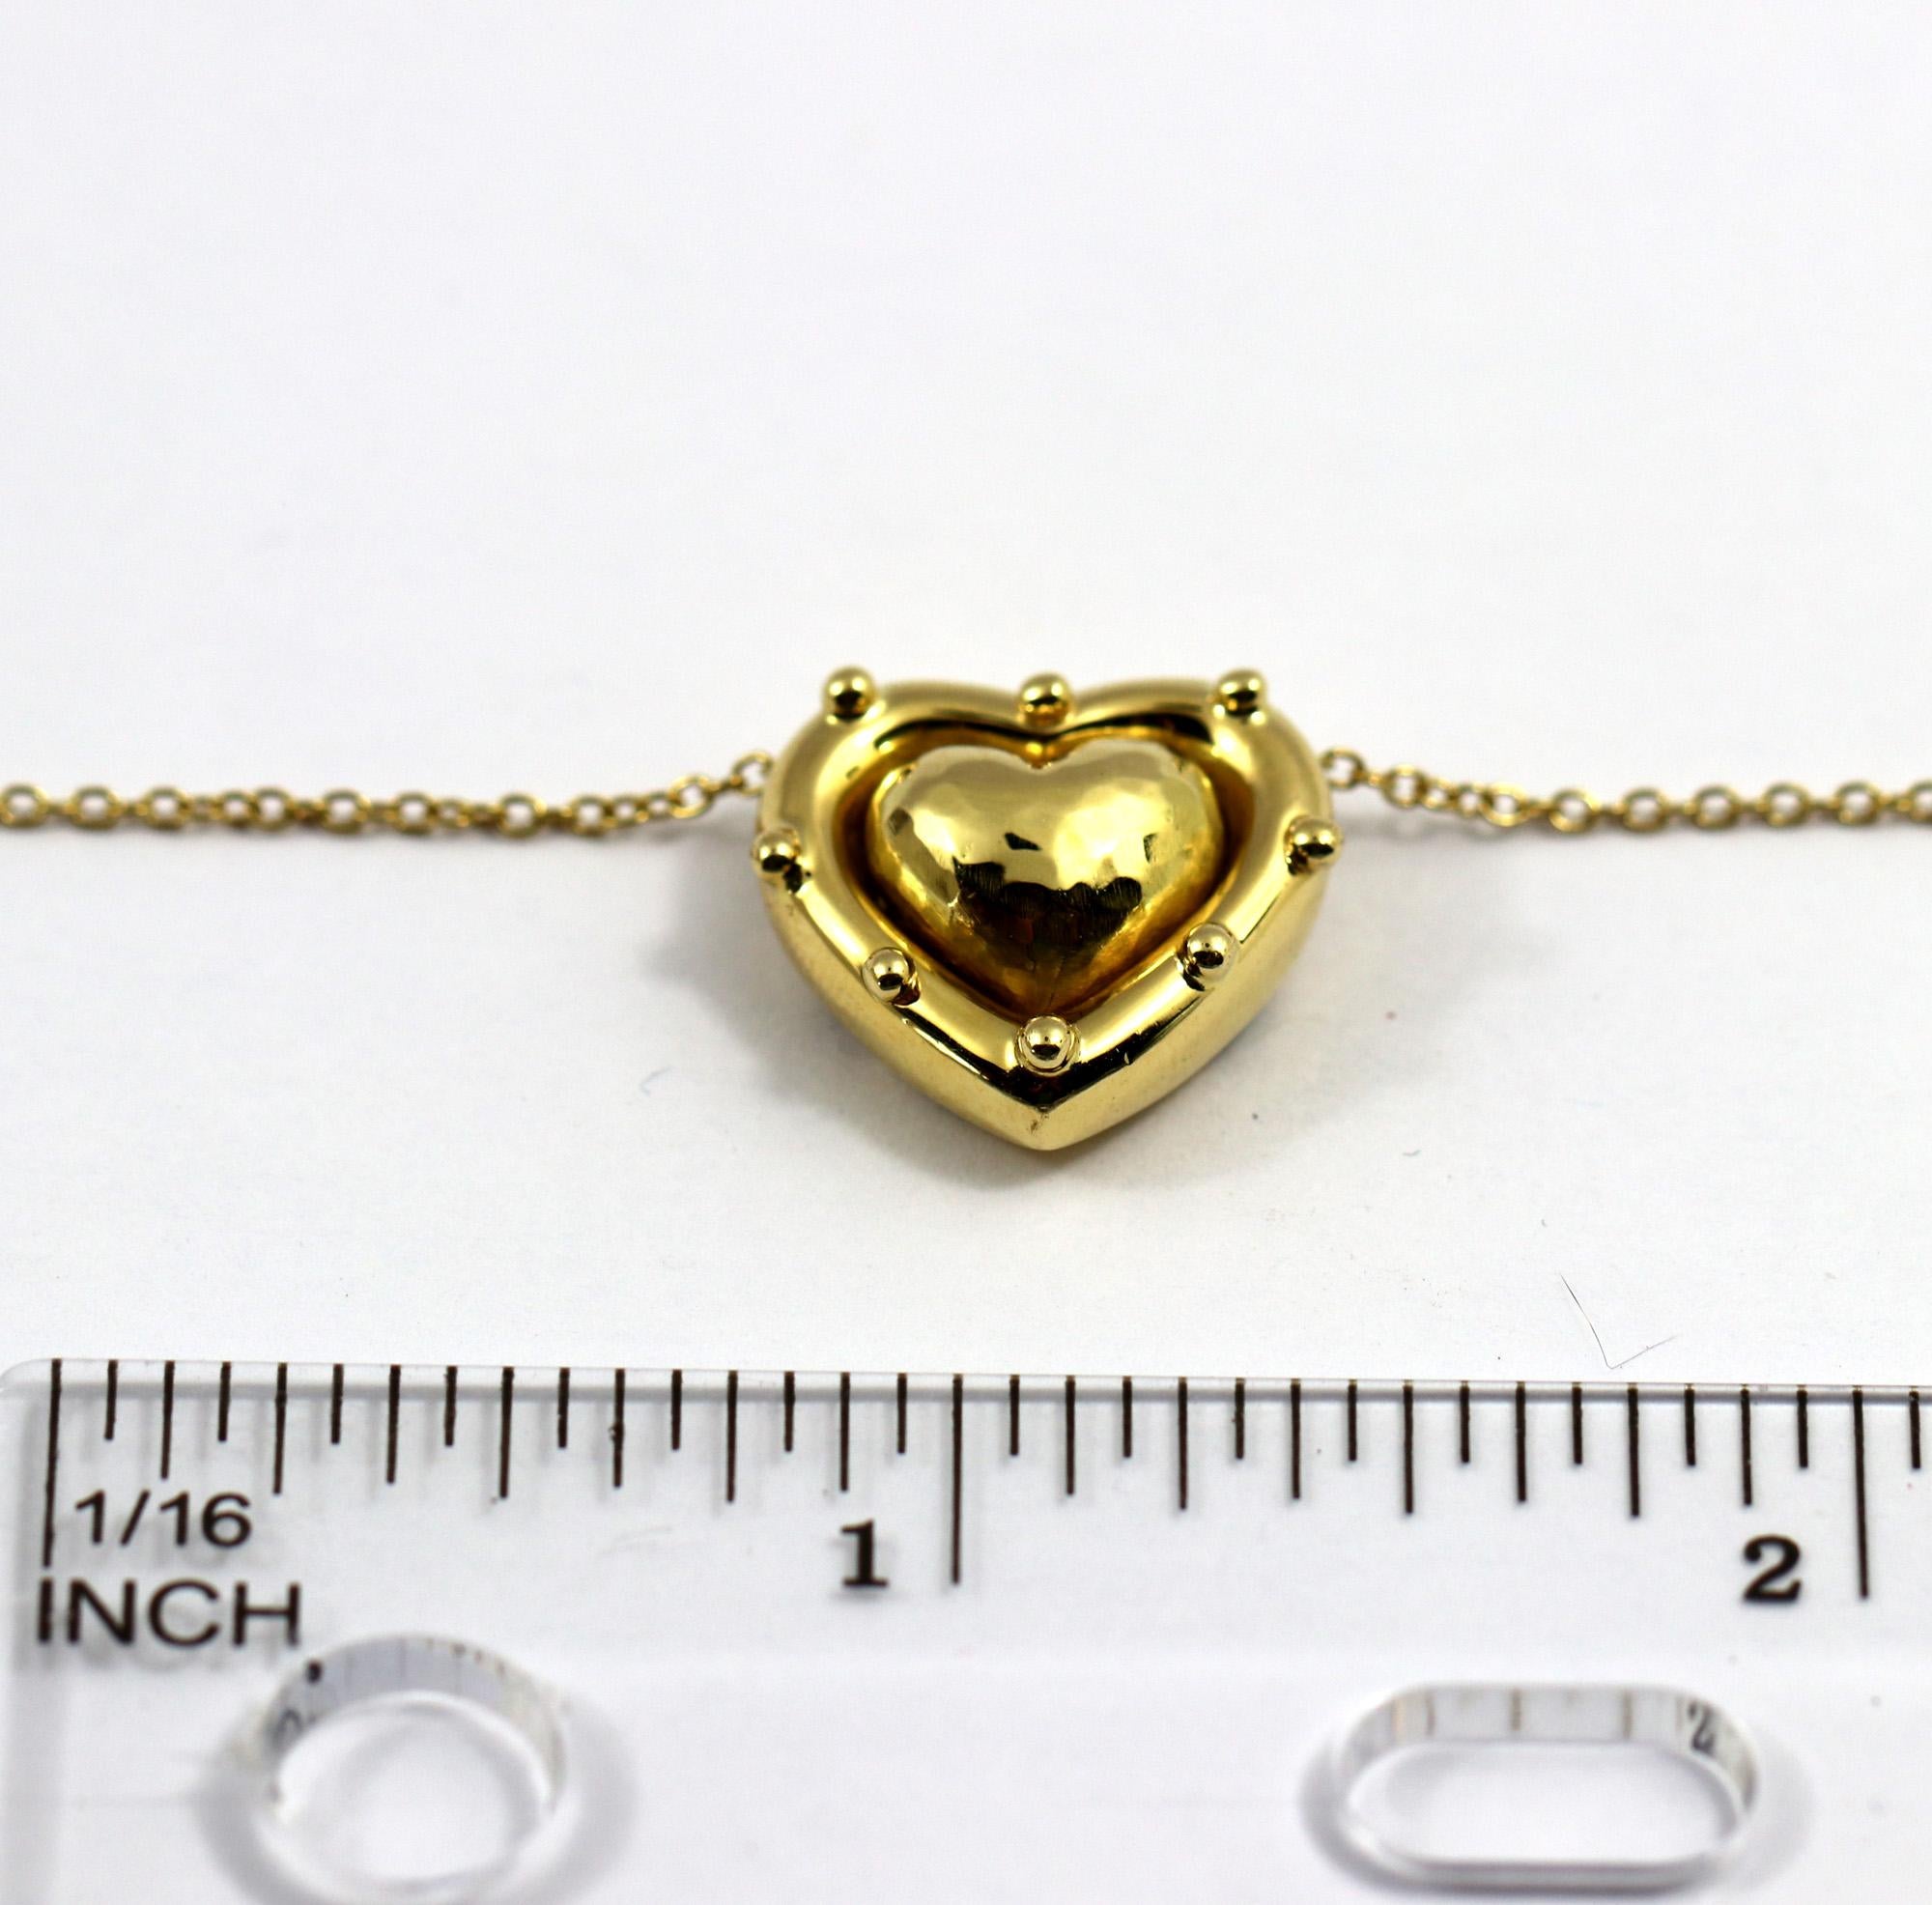 Women's Tiffany & Co. Puffed Heart Pendant on Gold Chain